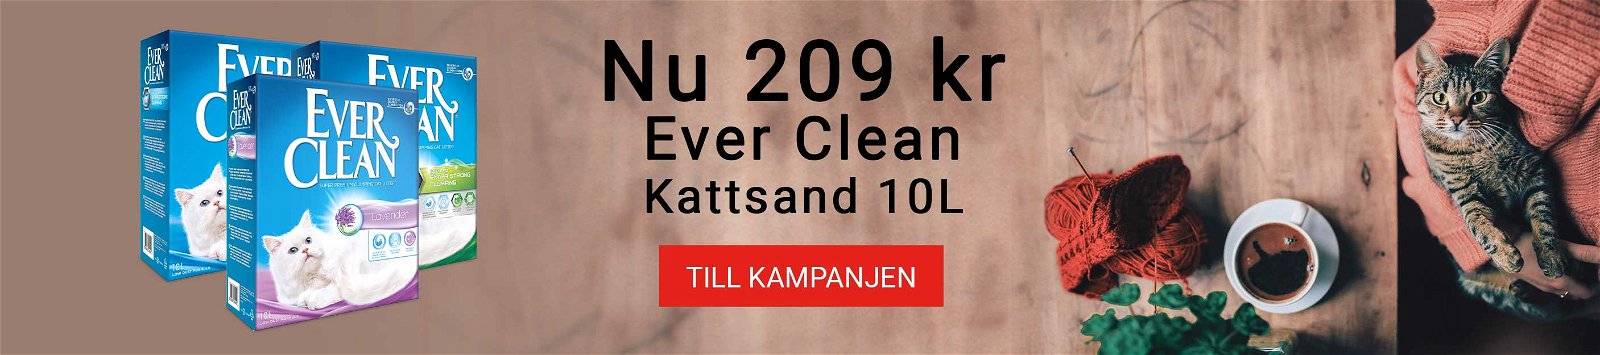 Kampanj Ever Clean Kattsand